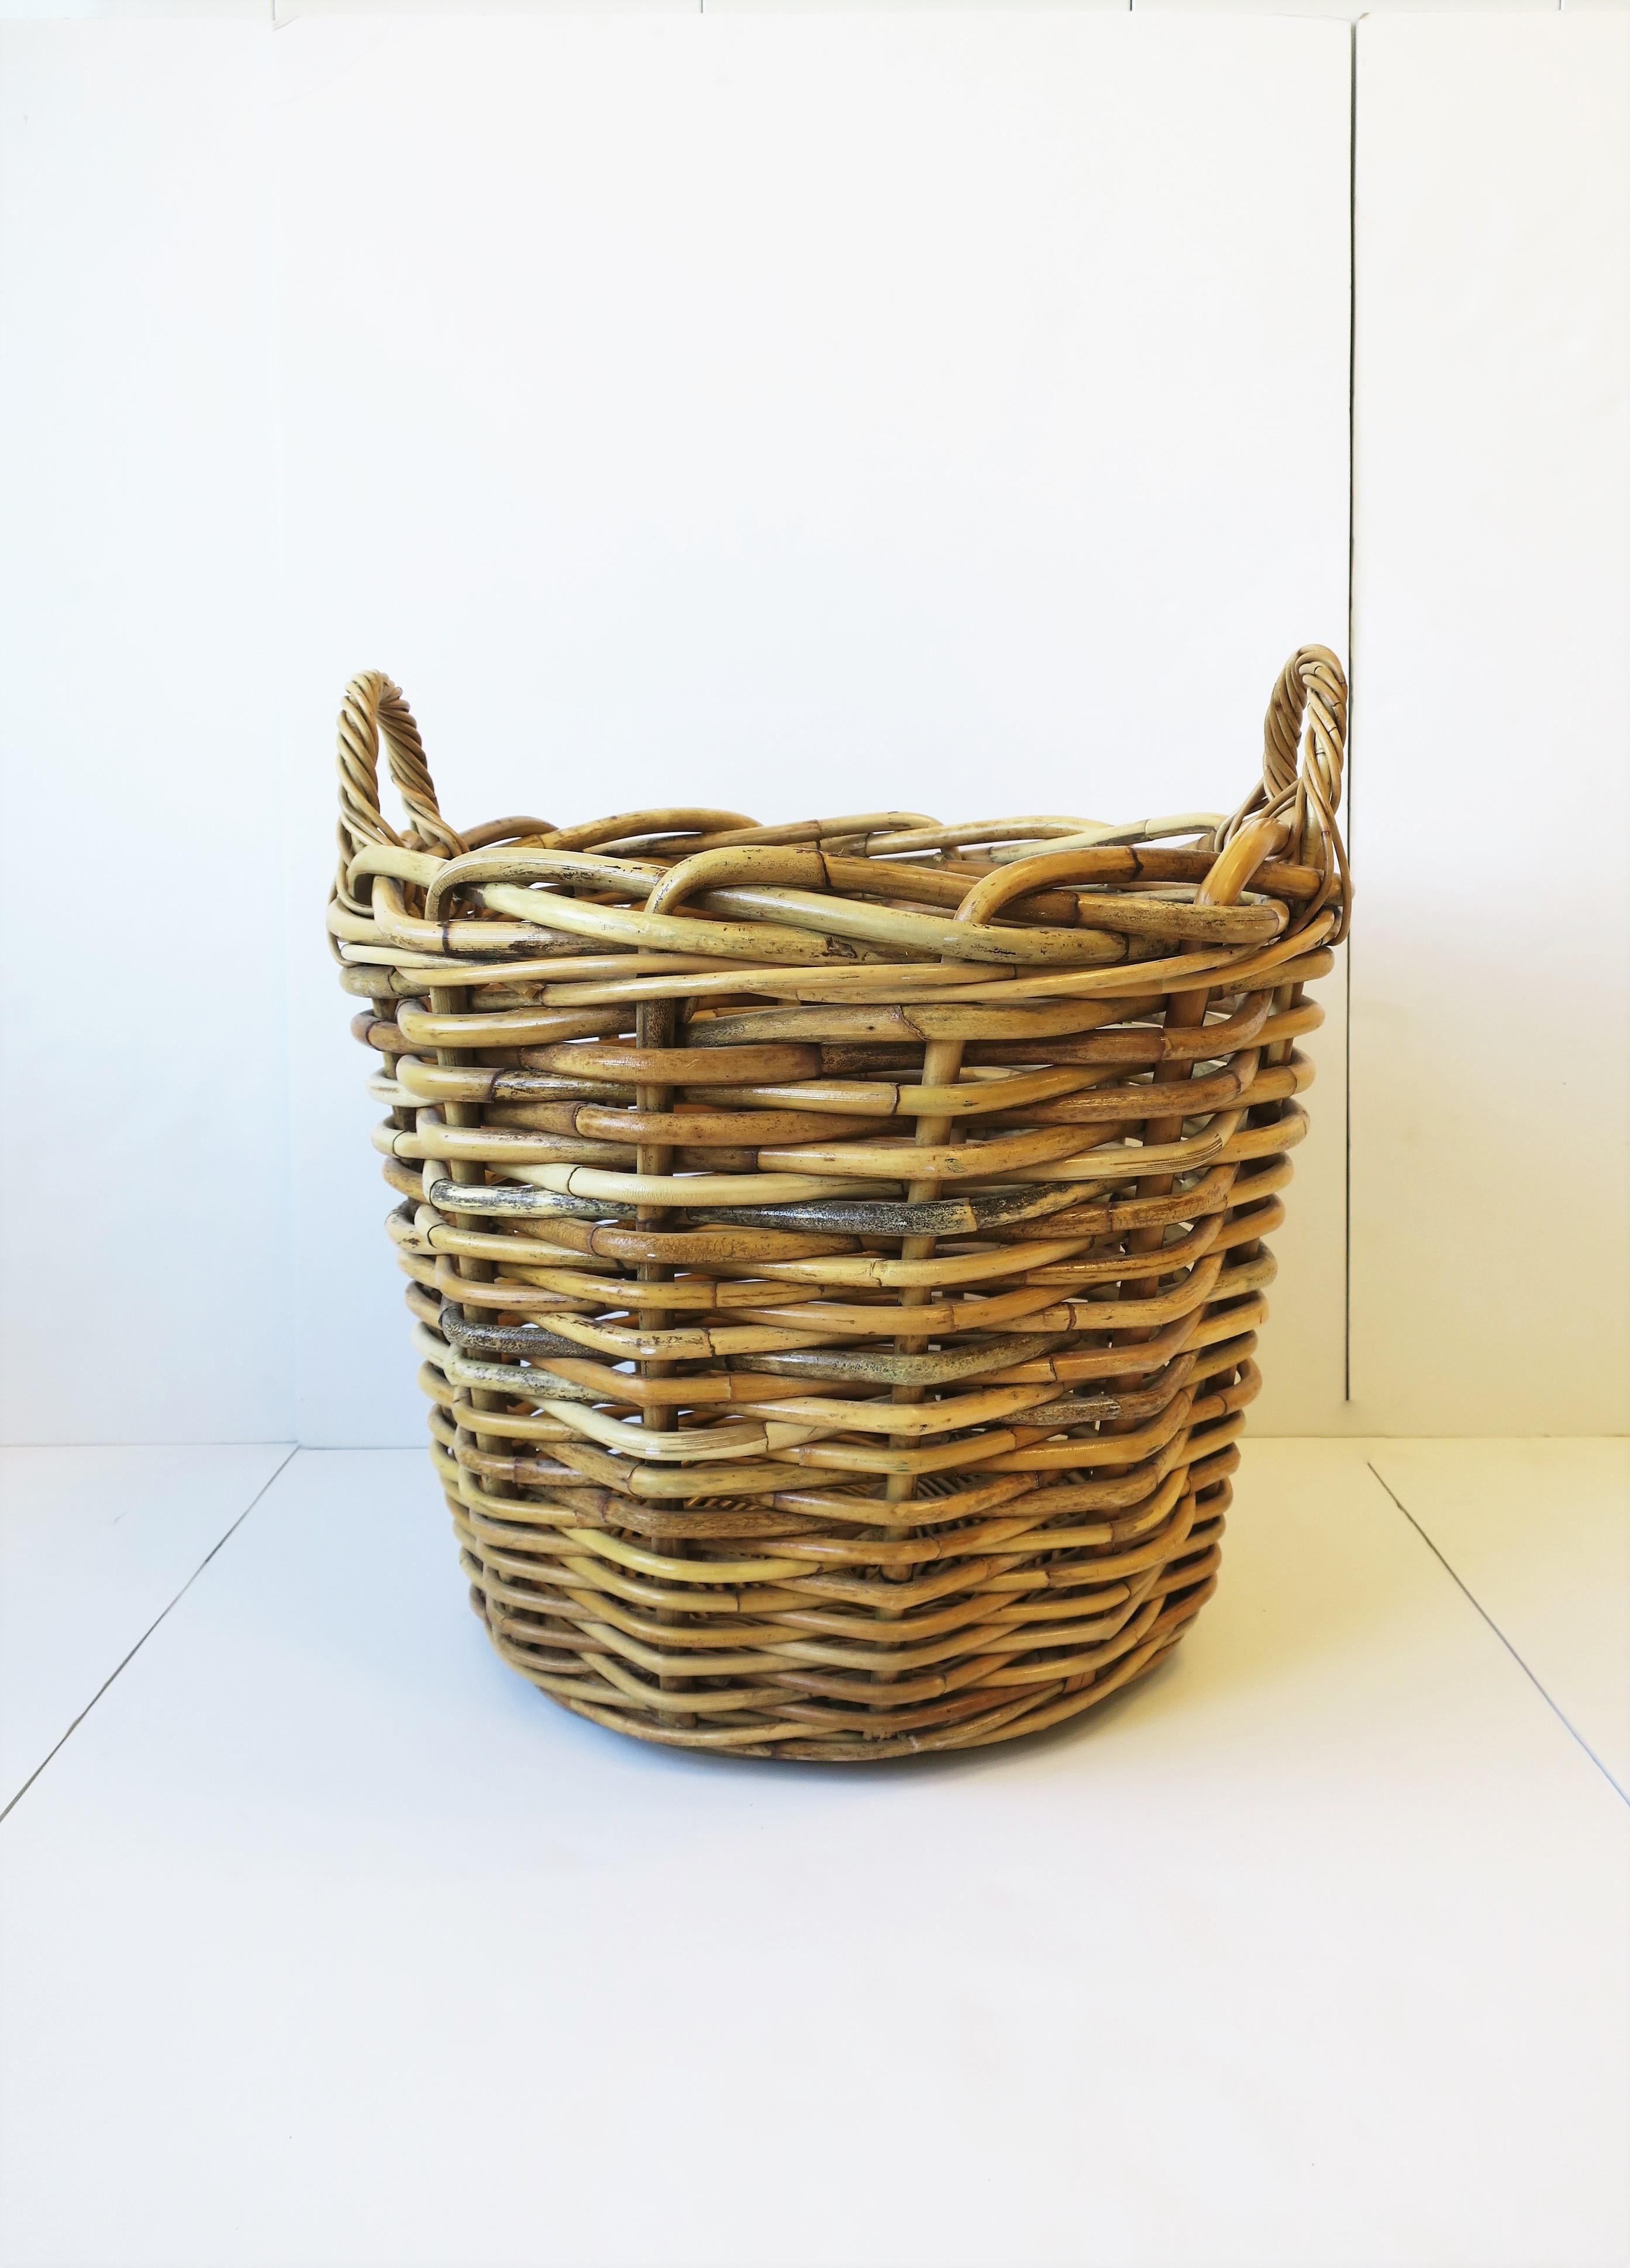 Wicker Rattan Basket with Handles 2